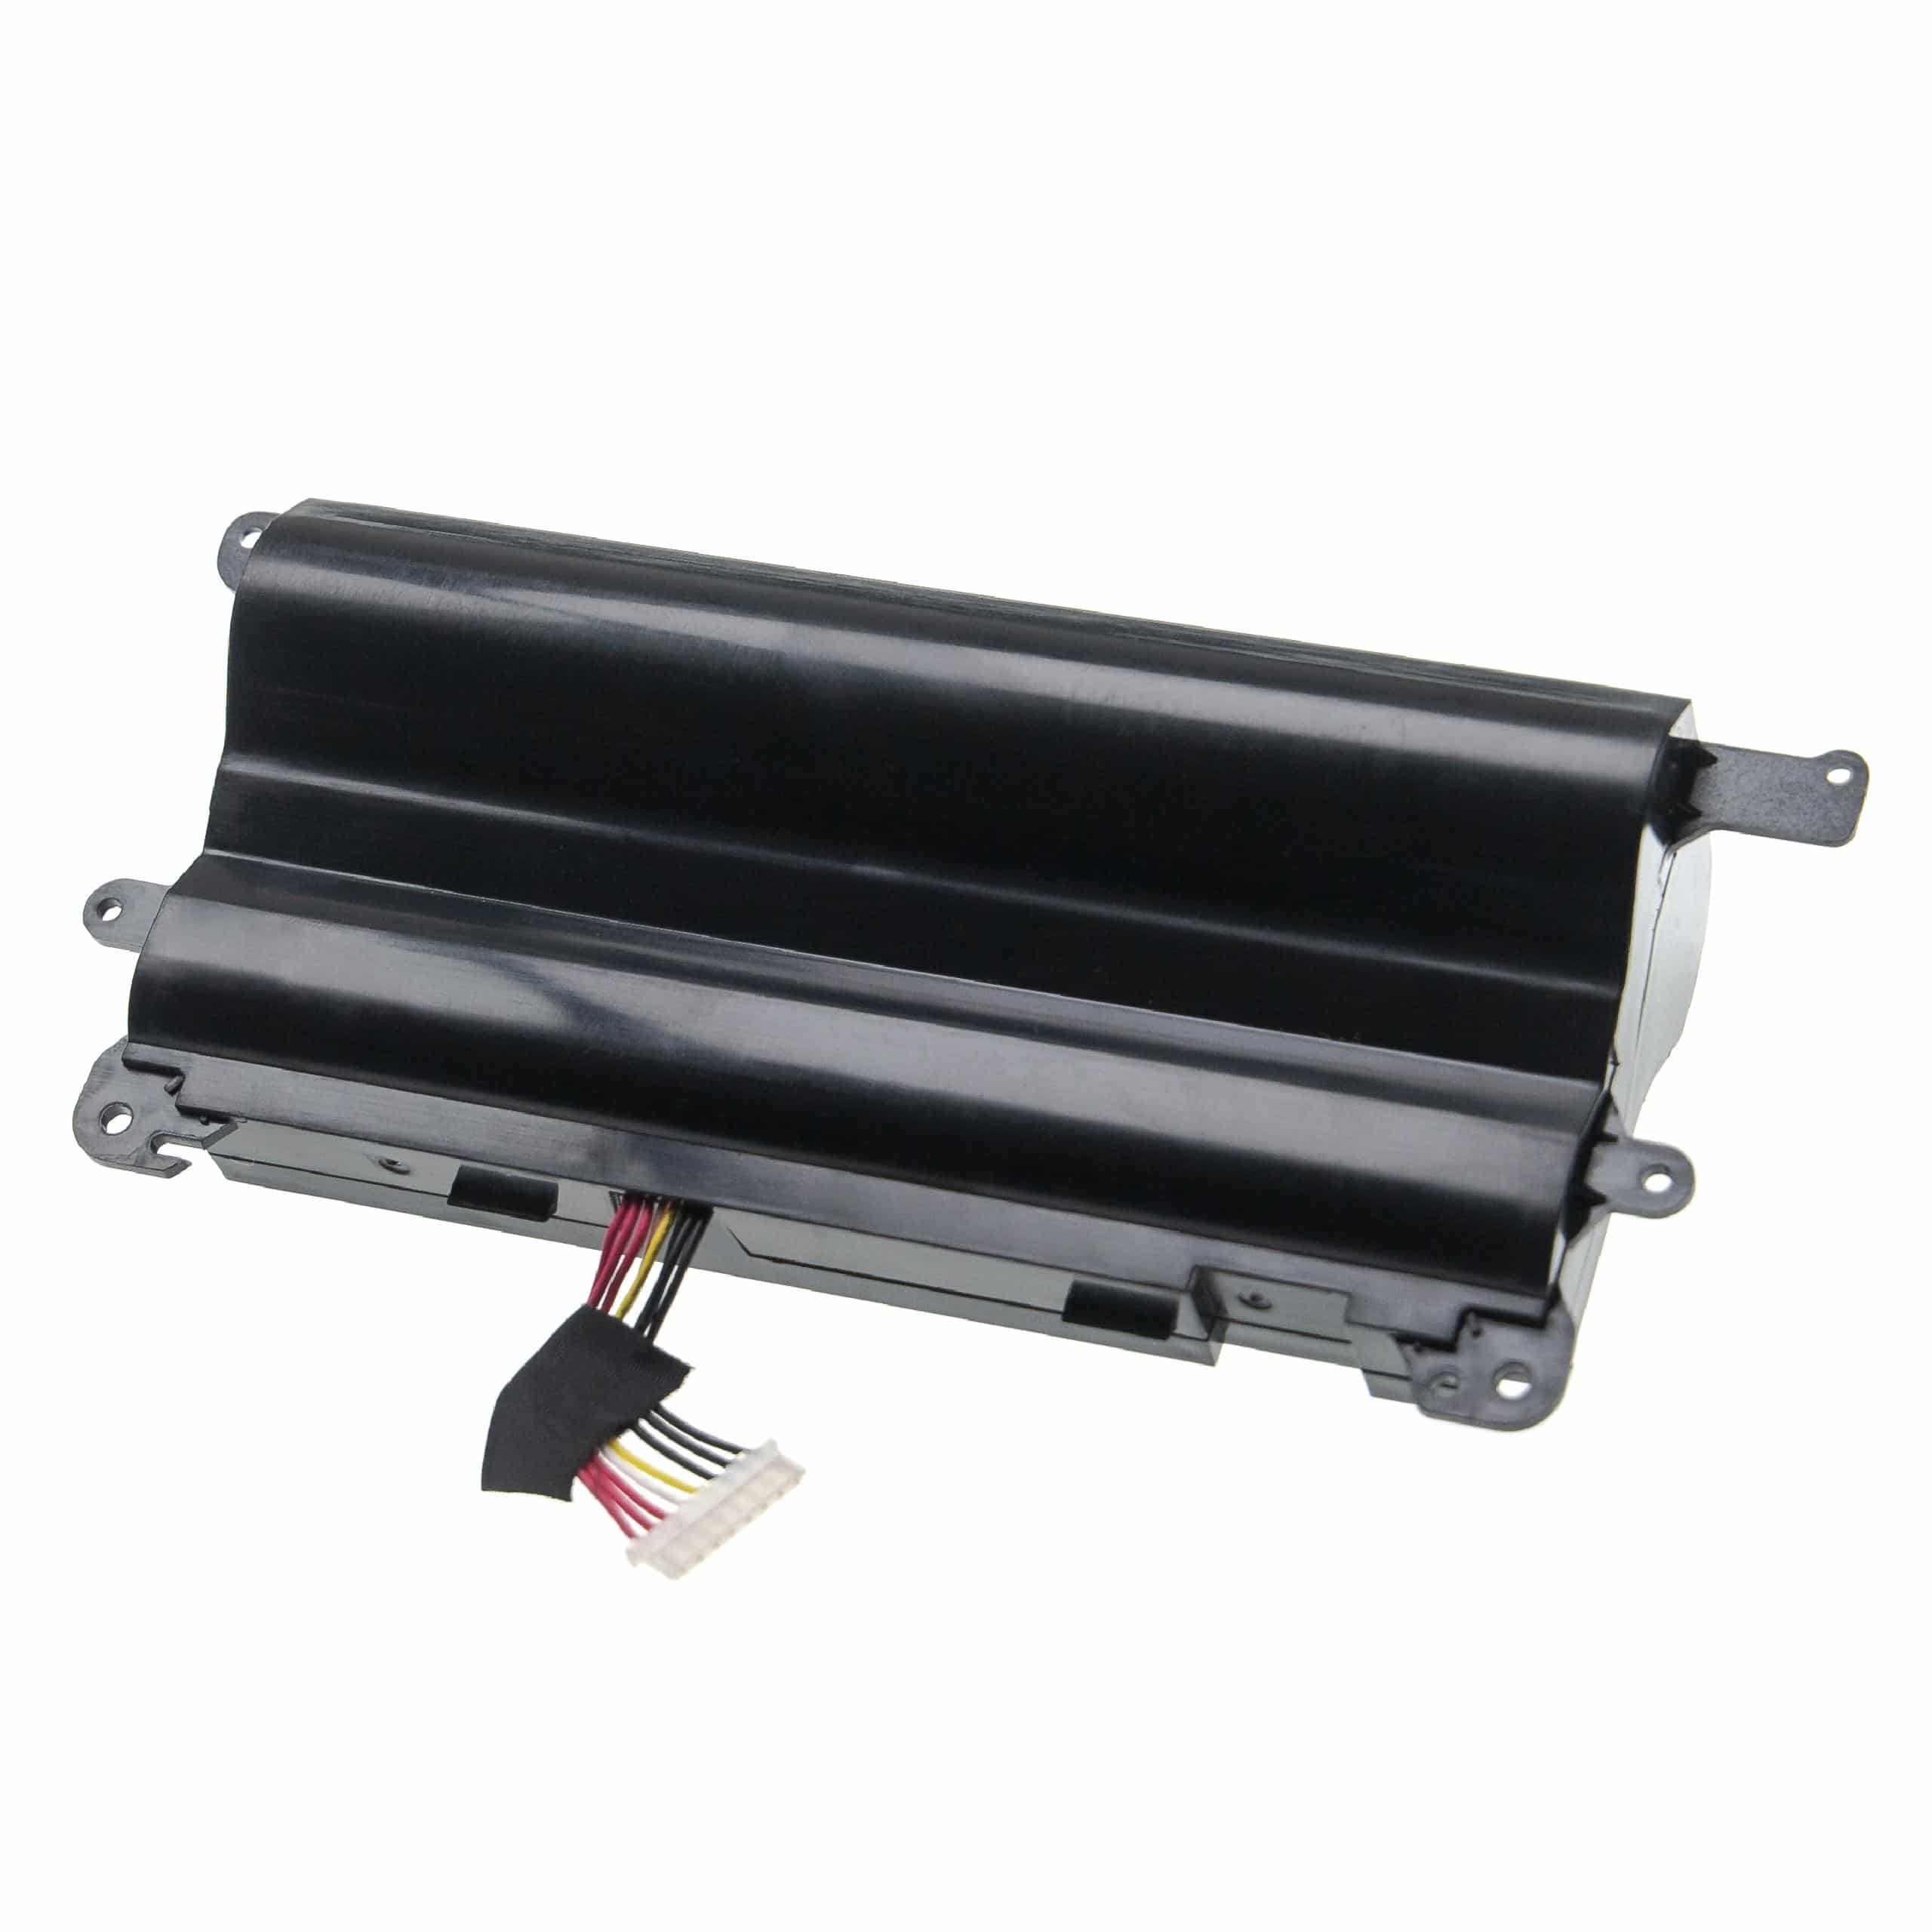 Akumulator do laptopa zamiennik Asus 0B110-00380200, 0B110-00380000 - 5600 mAh 15 V Li-Ion, czarny